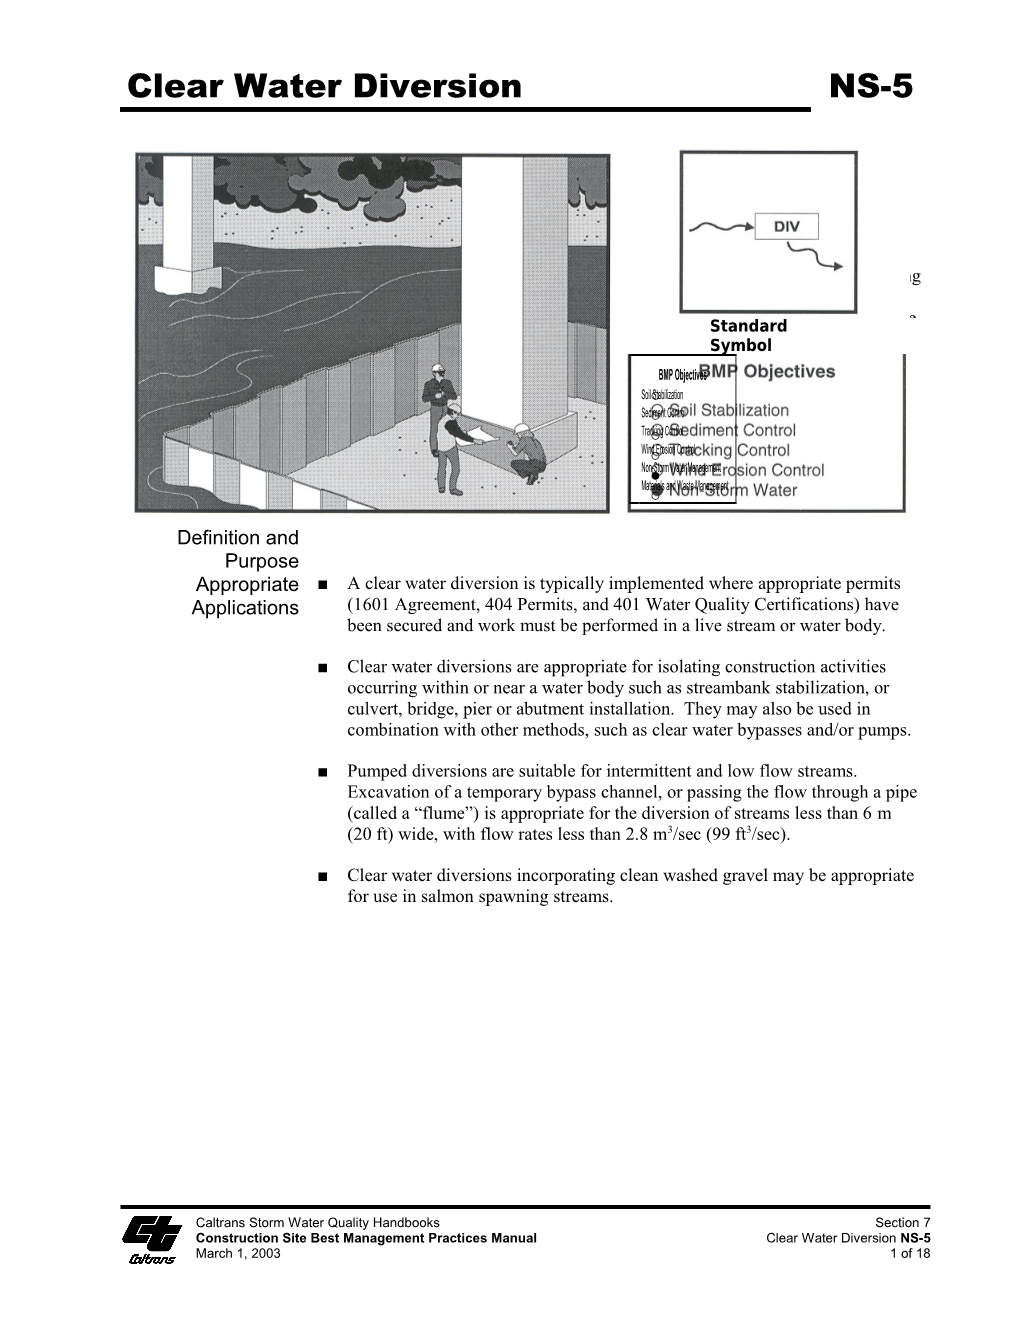 Construction Site Best Management Practices Manual Clear Water Diversion NS-5